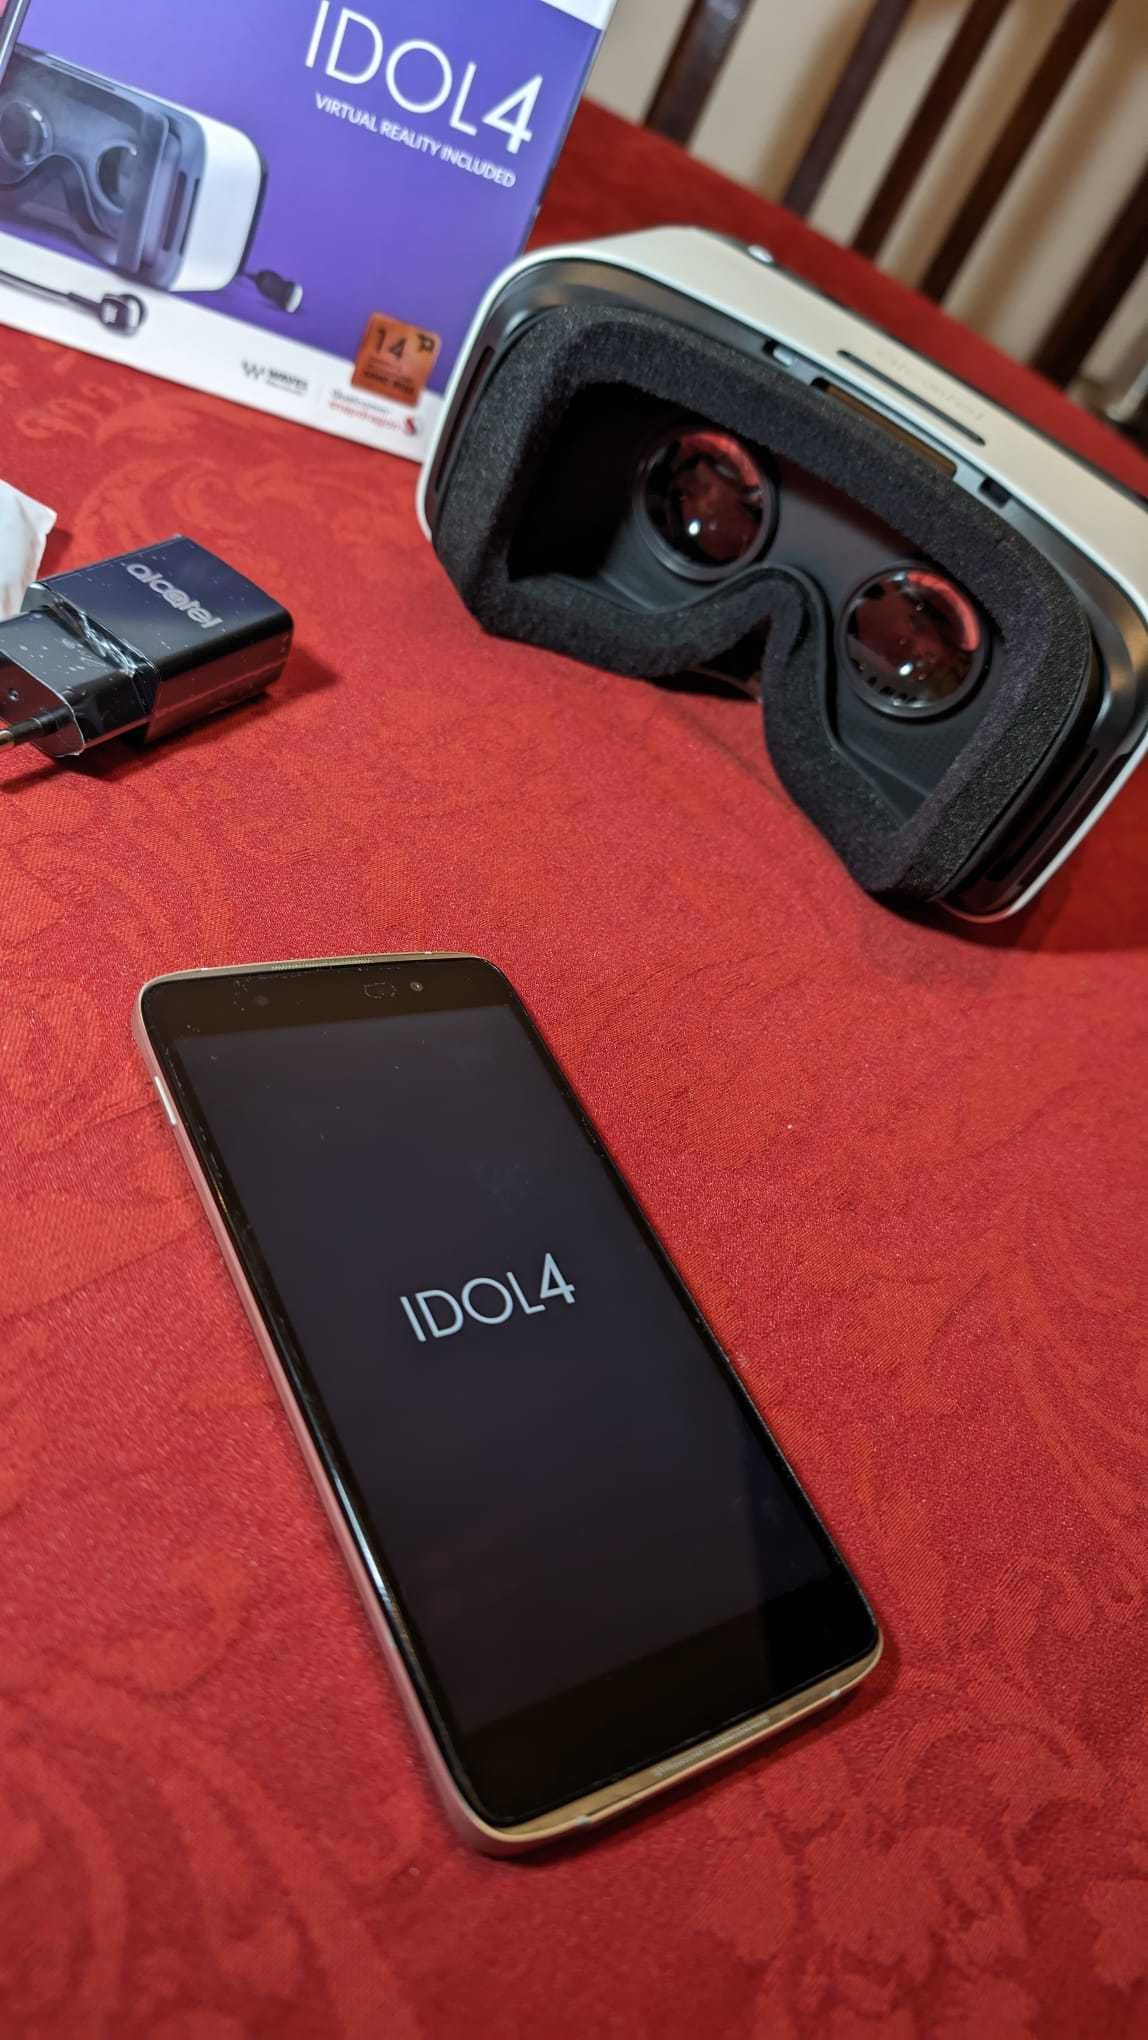 Óculos realidade aumentada 3D NOVOS + Alcatel Idol 4 + 2 capas + caixa